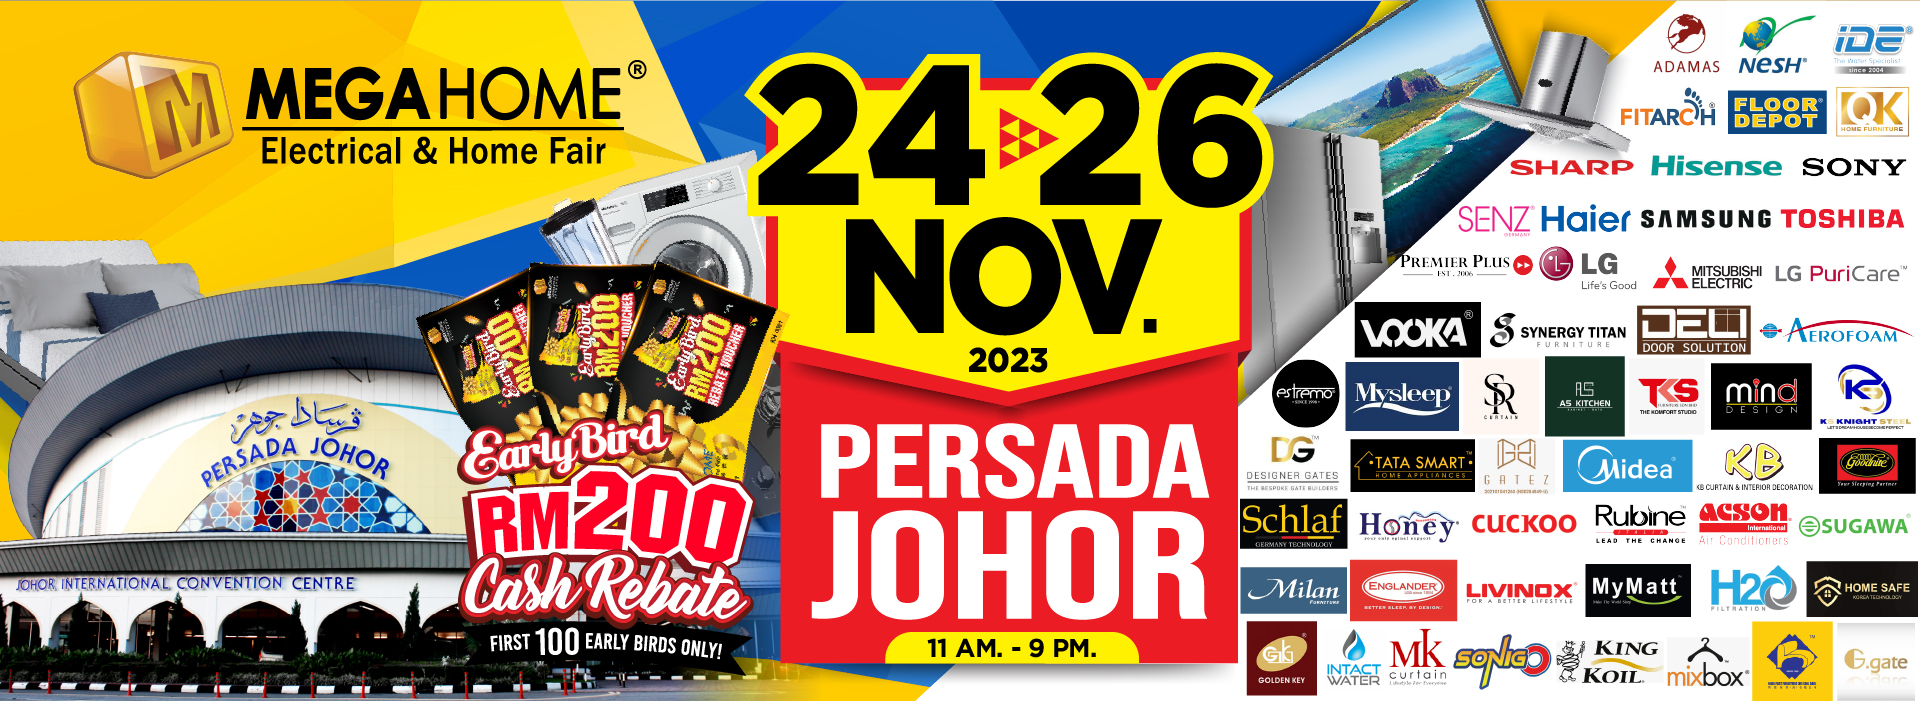 Persada Johor, 24 - 26 Nov 2023